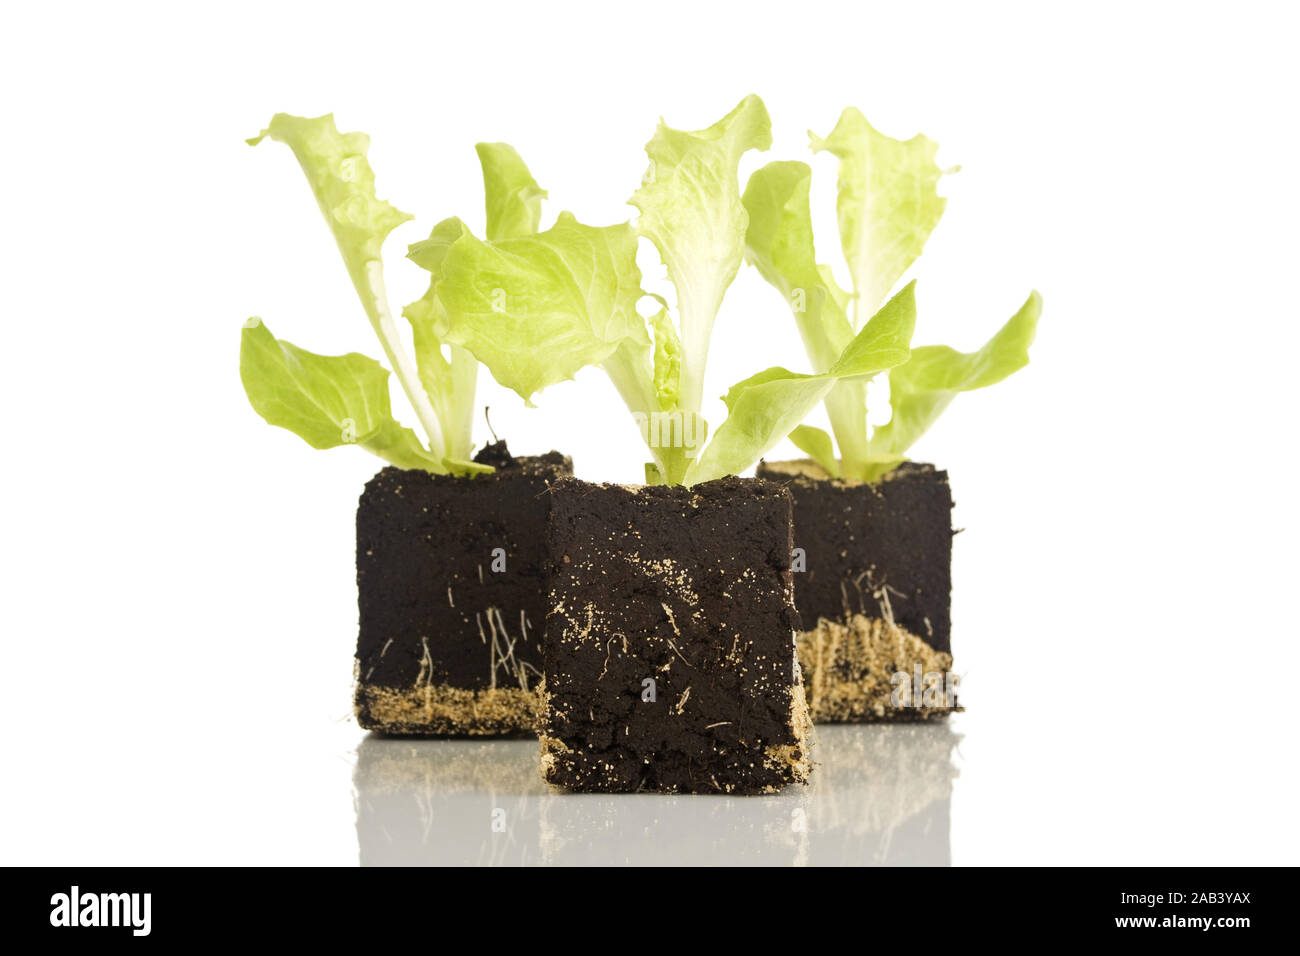 Salatpflanzen Setzlinge |Salad plant seedlings| Stock Photo